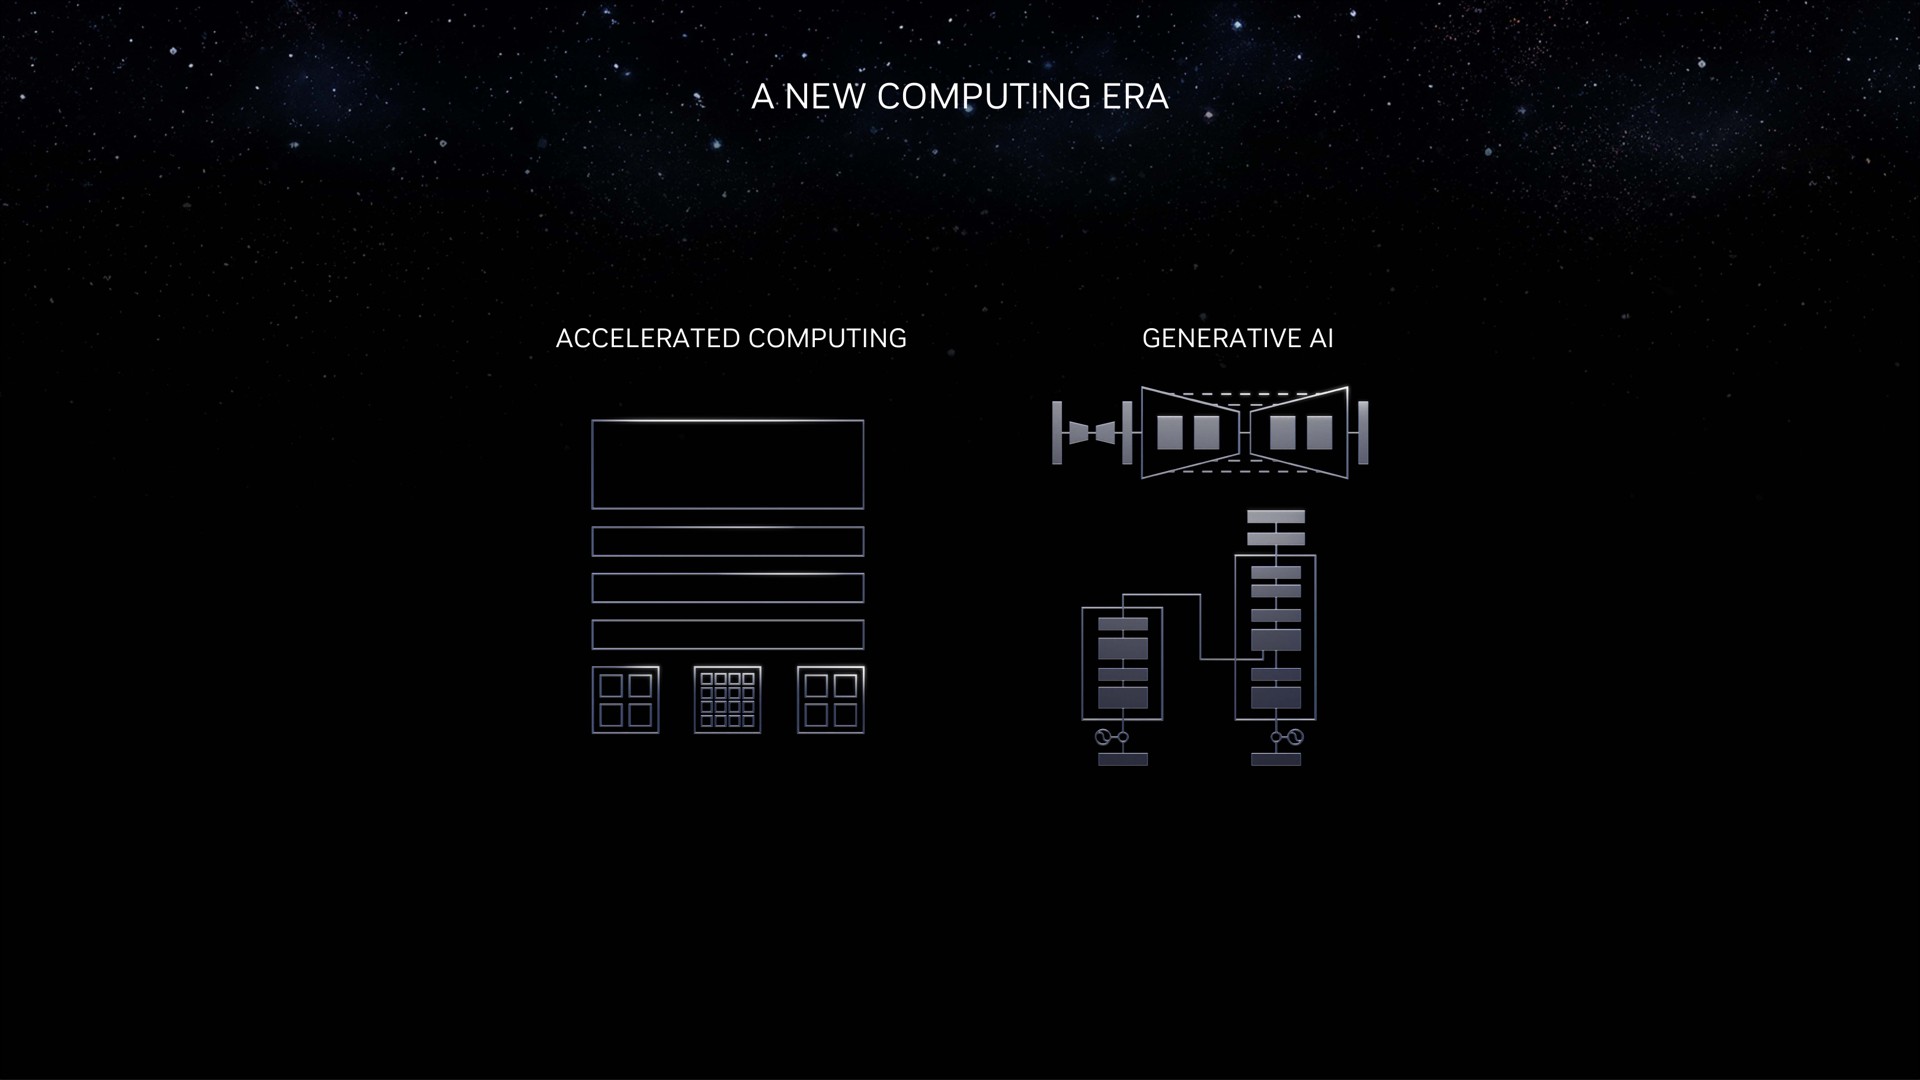 a new computing era | NVIDIA